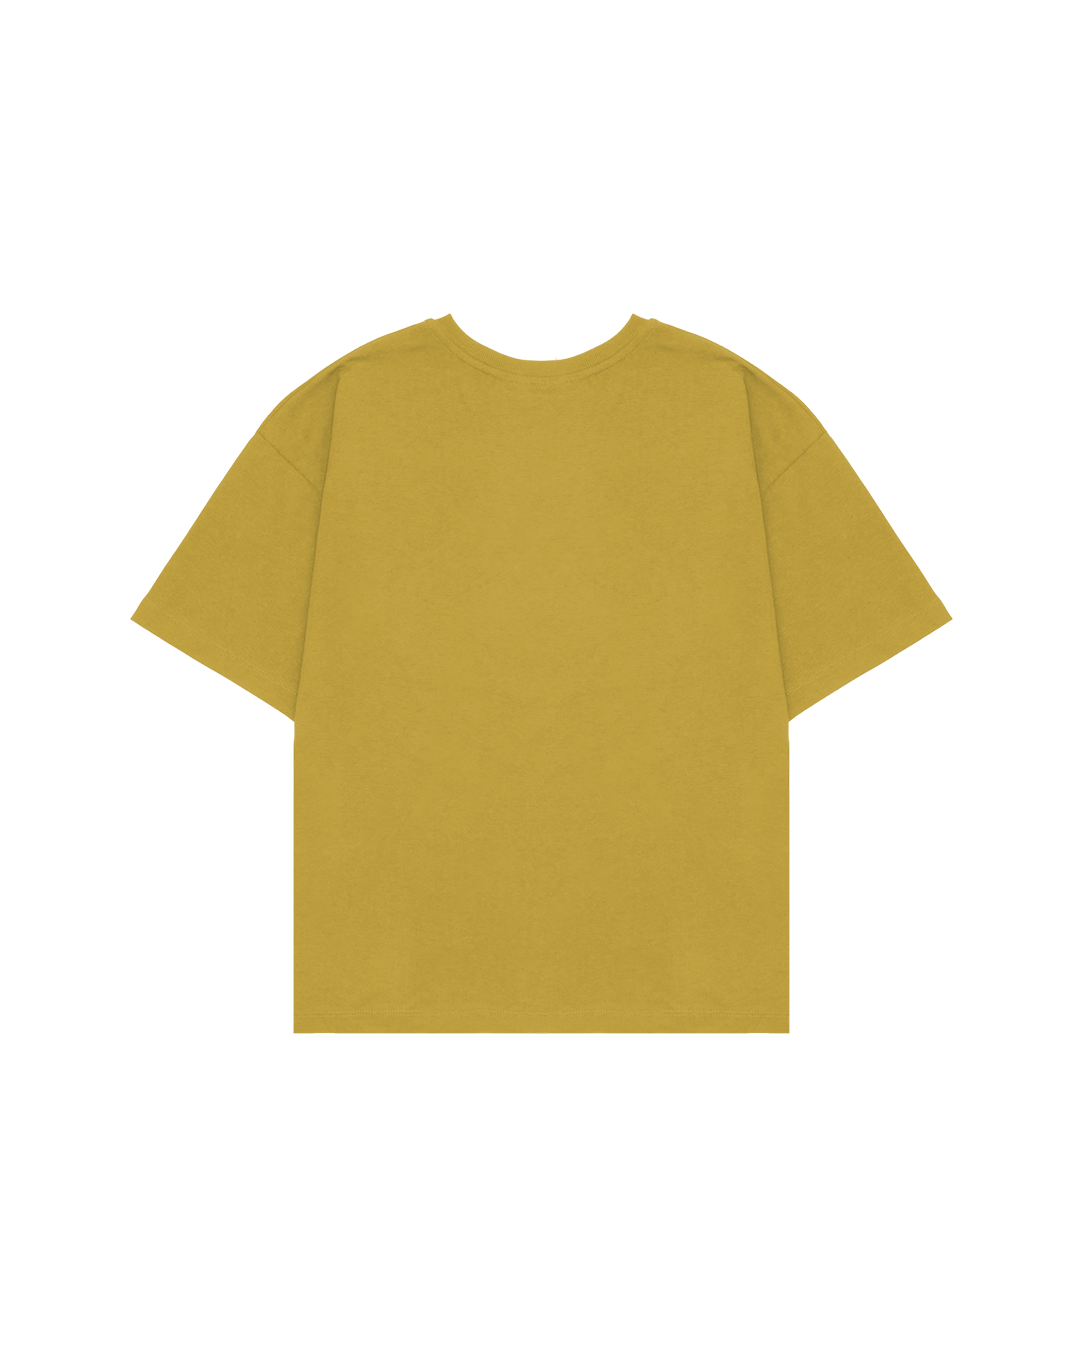 QCDU.2 Yellow T-Shirt